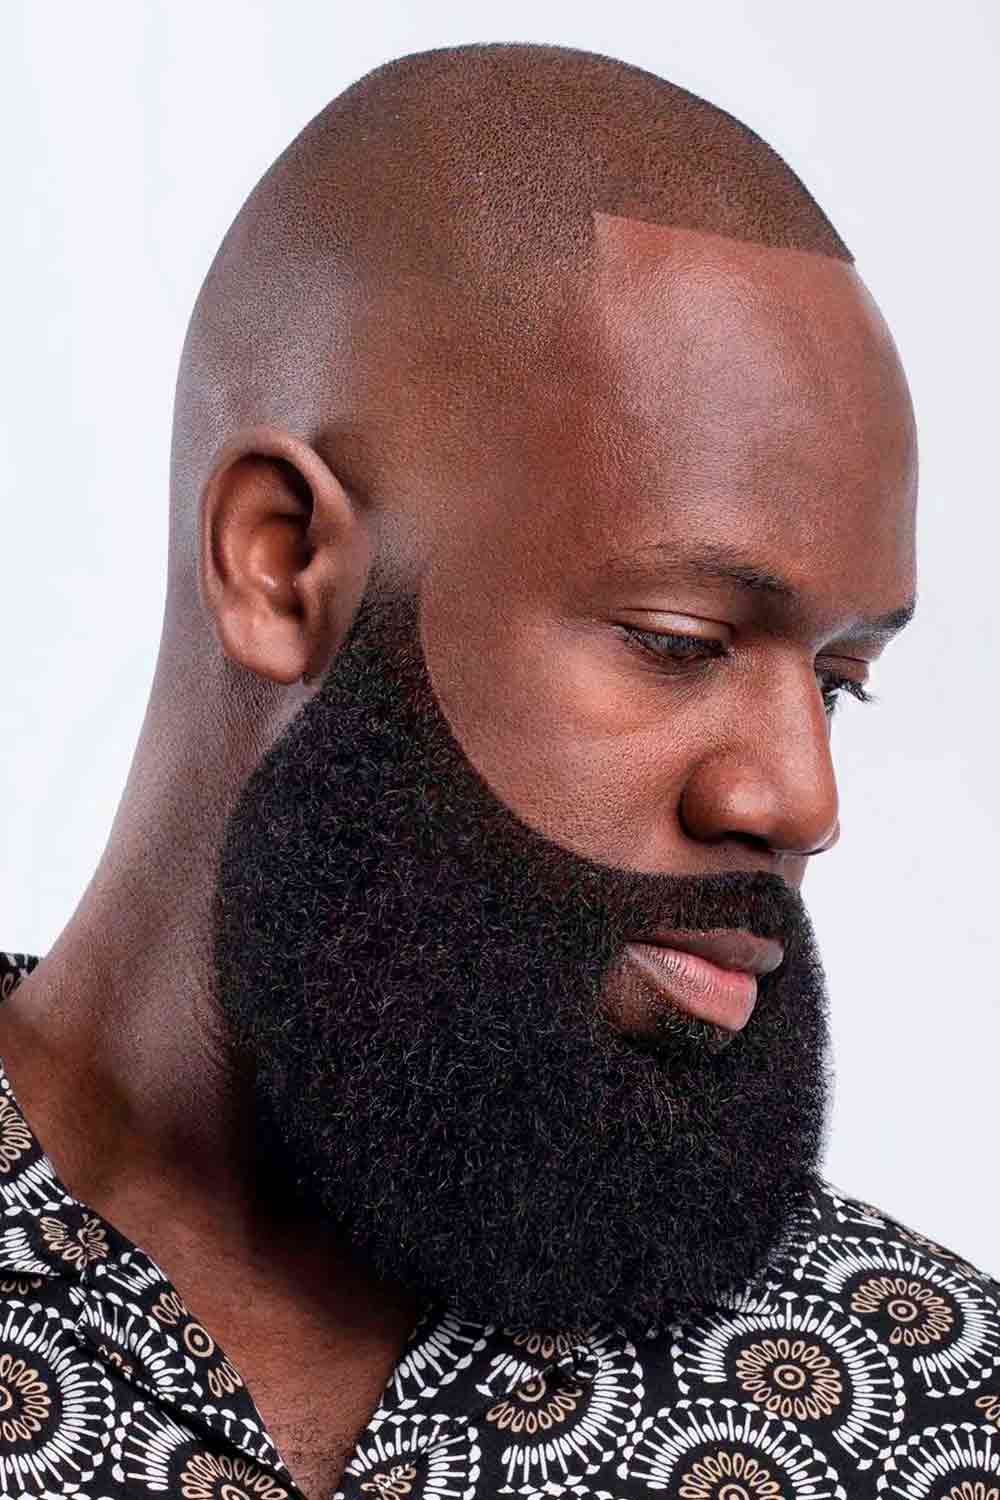 Bald Head And Full beard #blackmenhaircuts #blackmenhairstyles #afrohaircuts #haircutsforblackmen